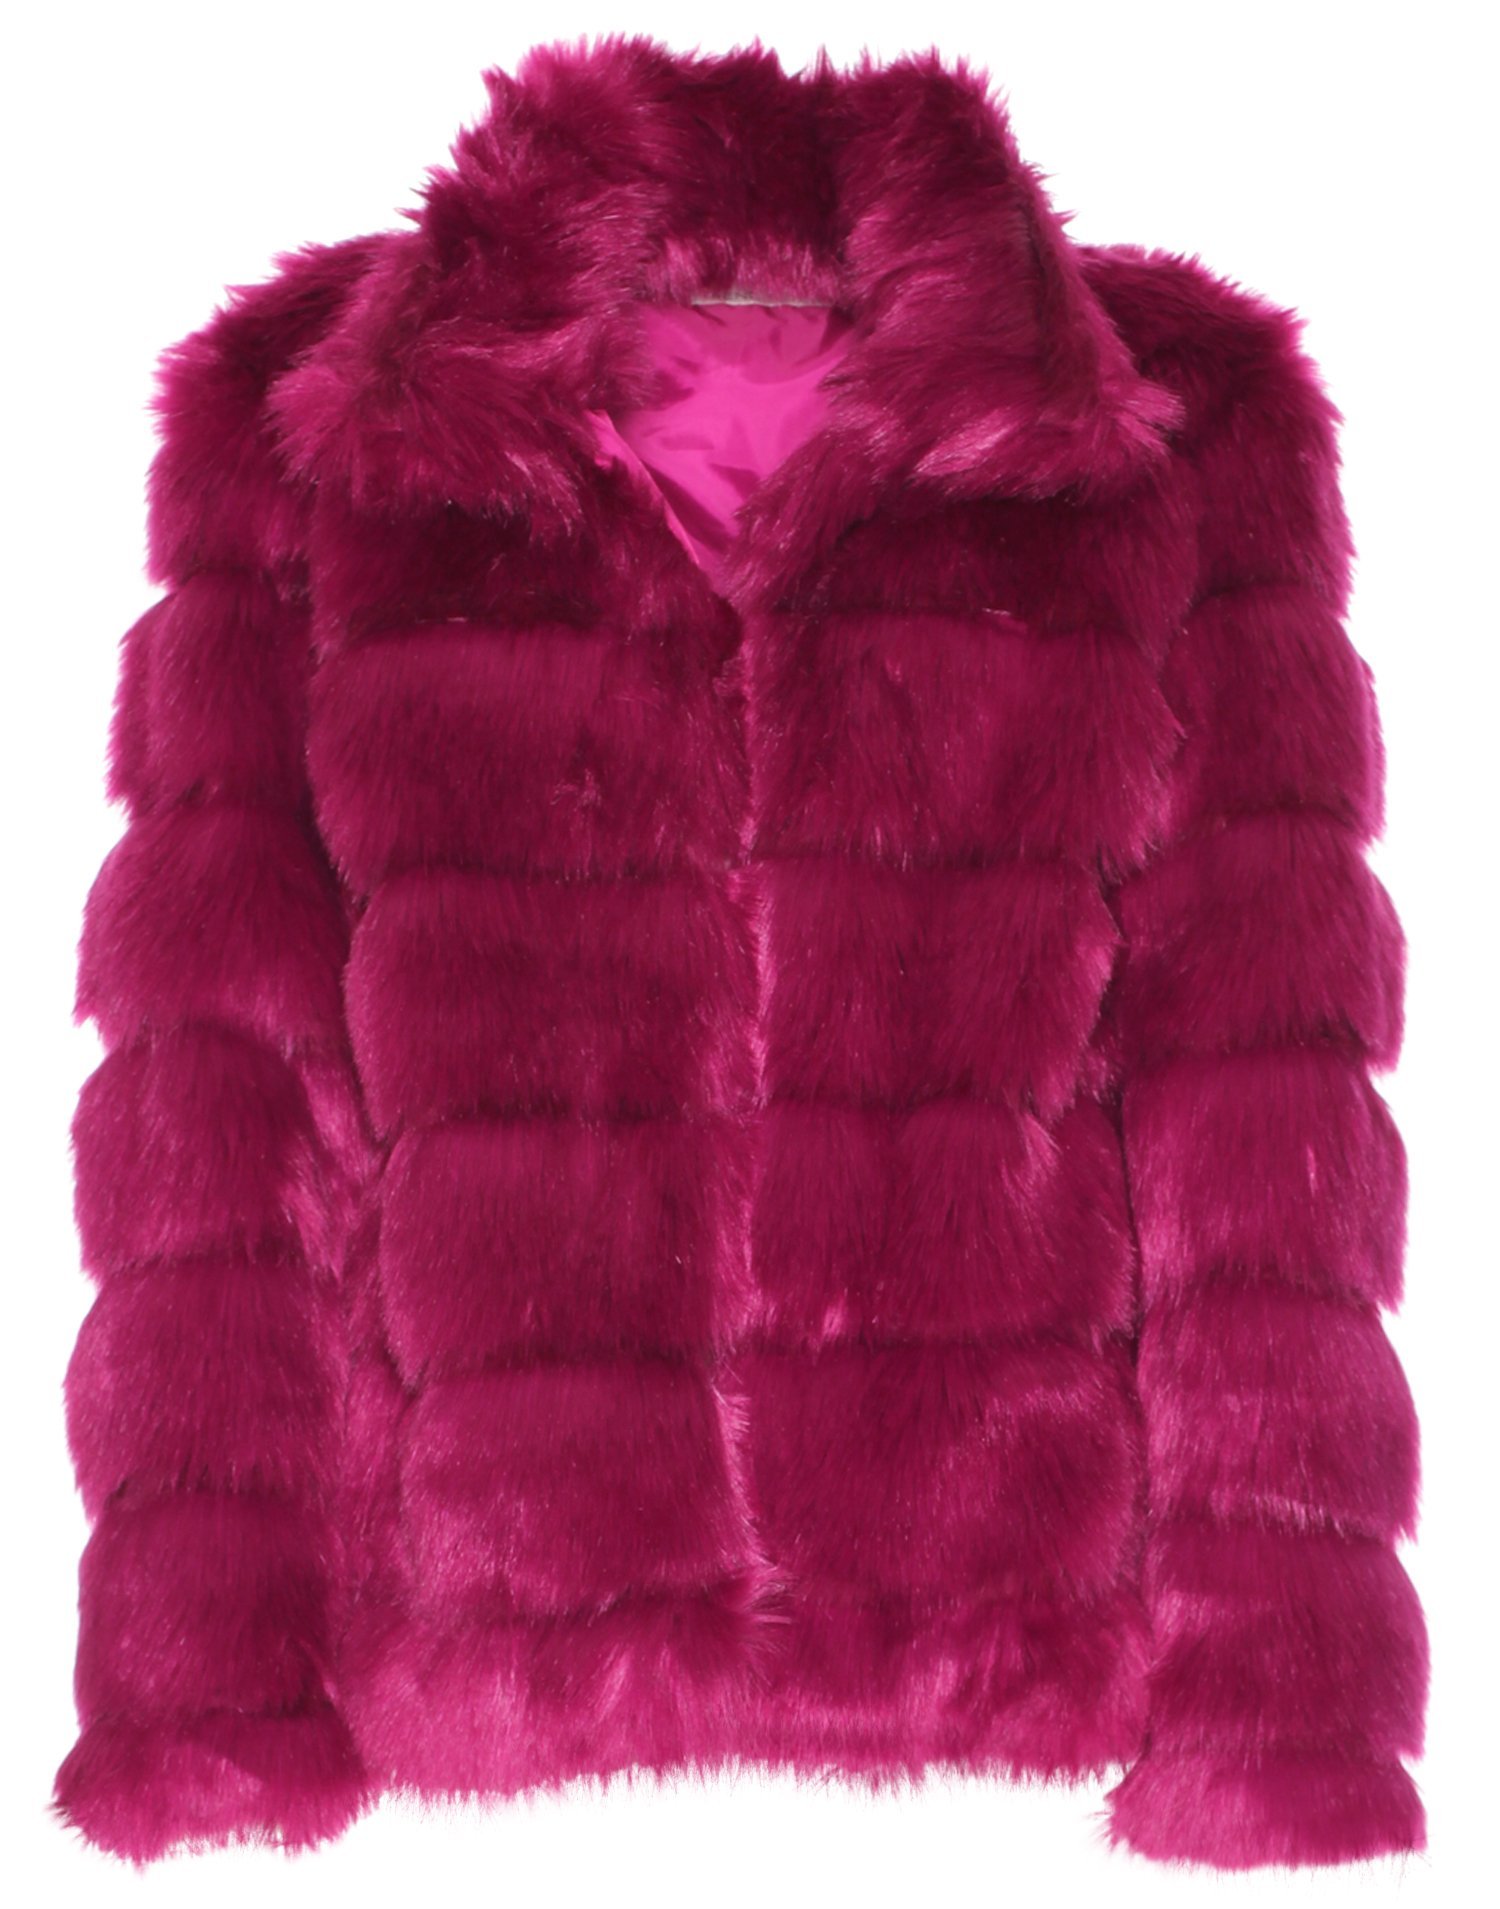 Puffy Fur Coat - Nly Trend - Fuchsia - Jackets - Clothing - Women ...